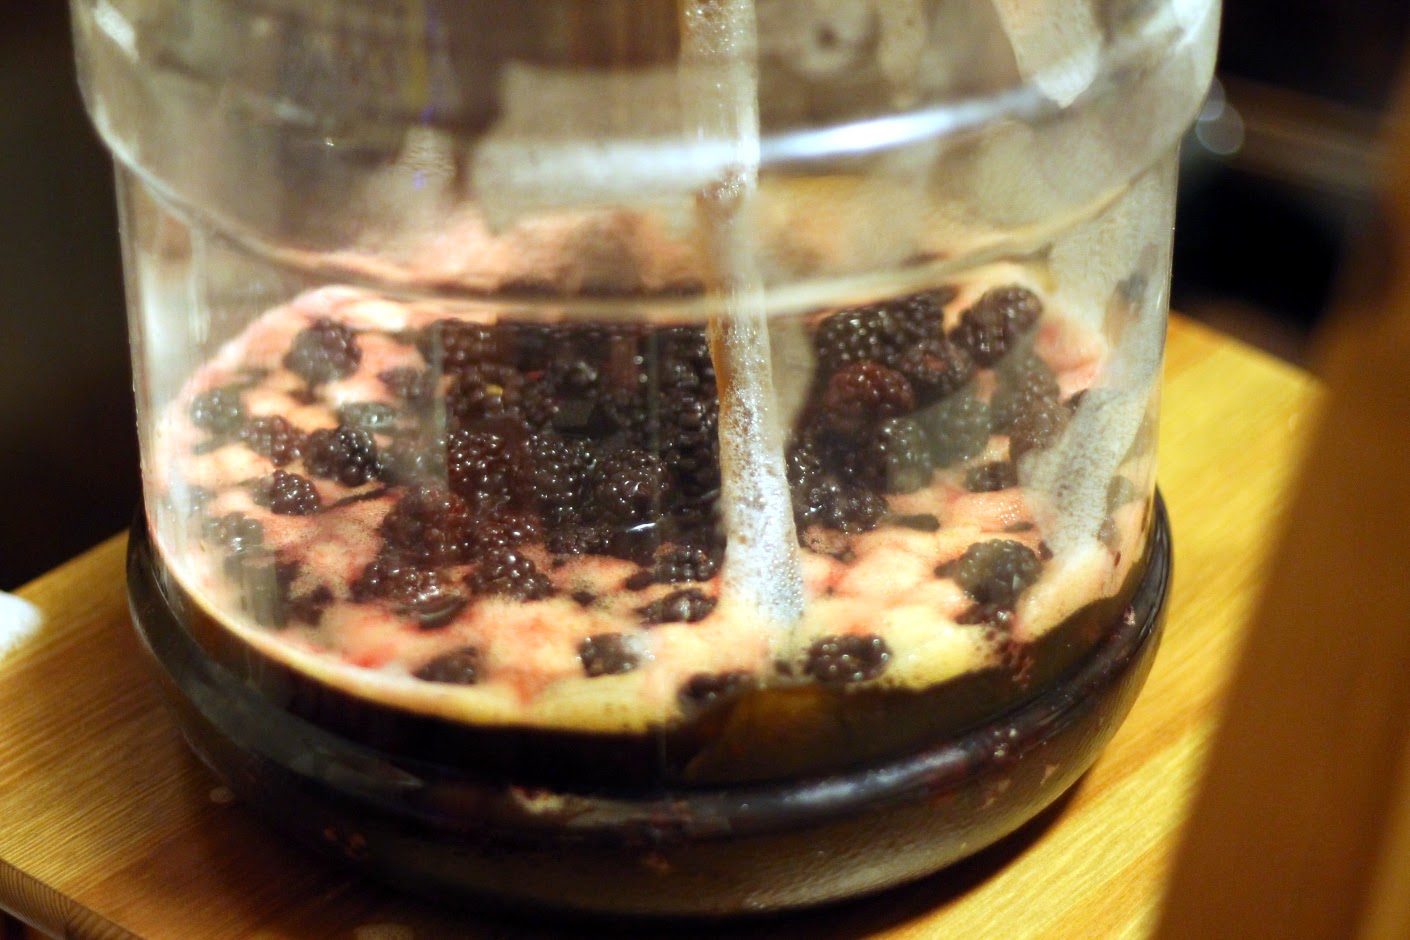 Soured stout racking onto blackberries.